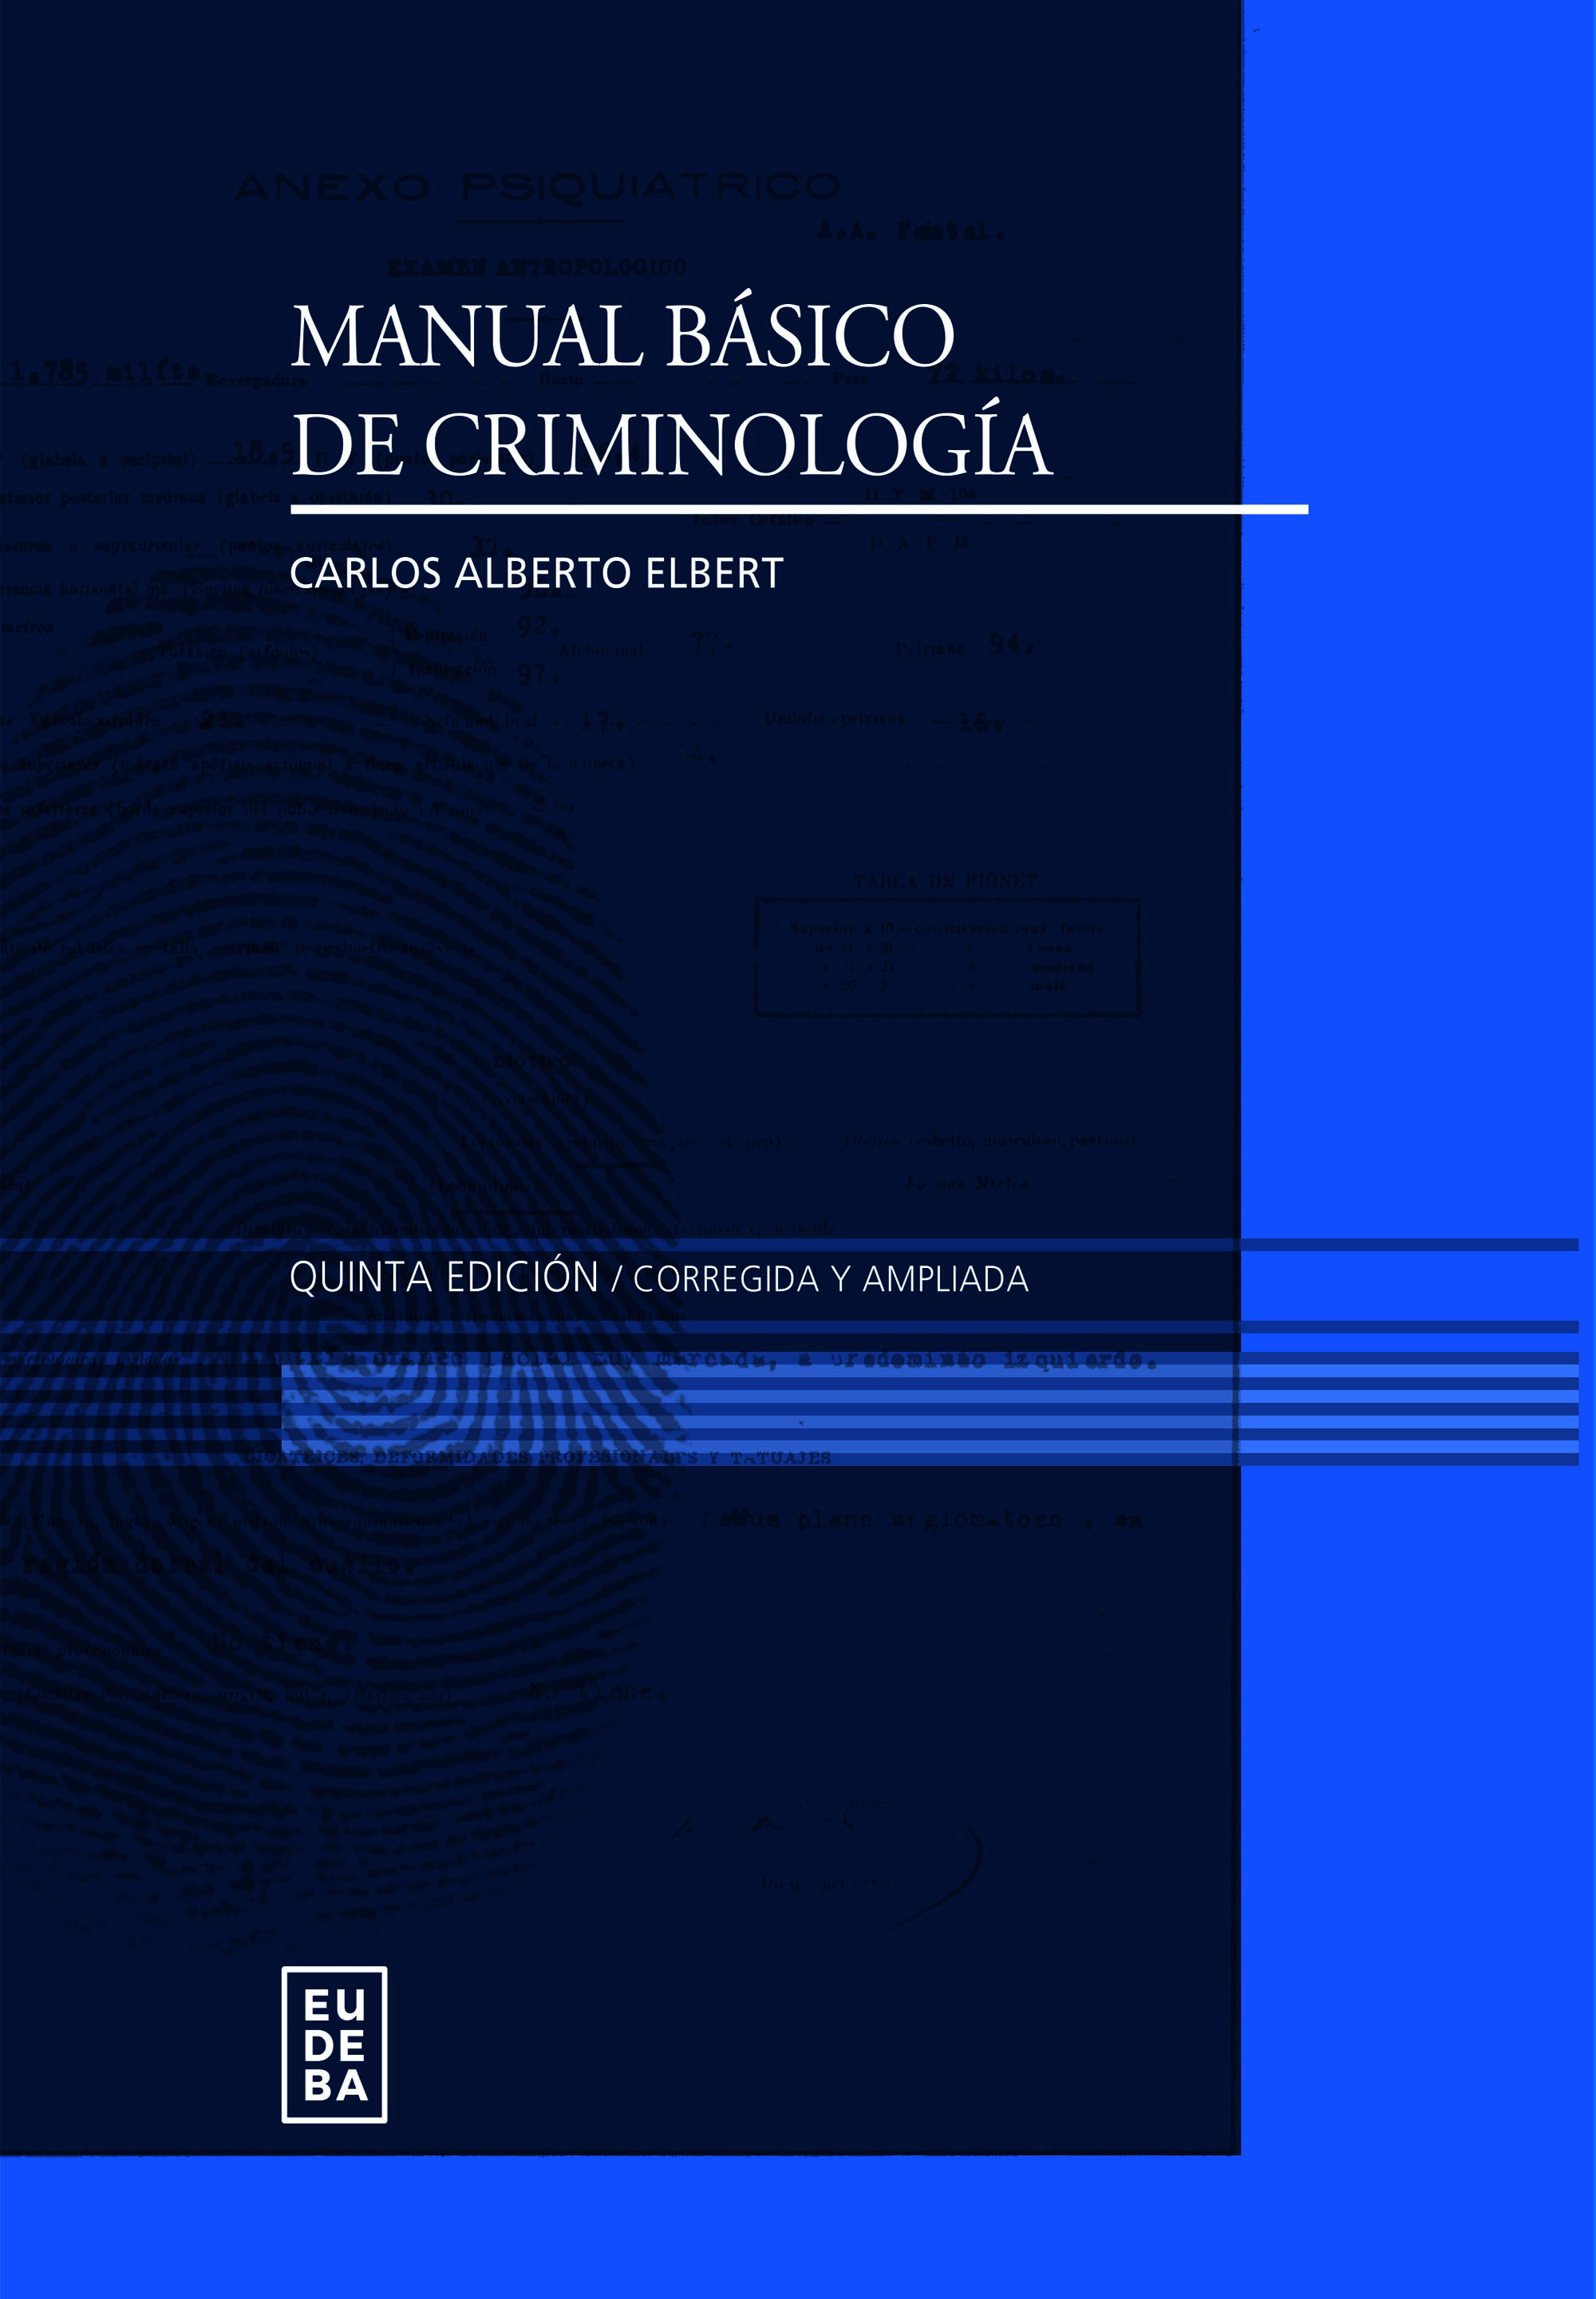 Manual basico de criminologia